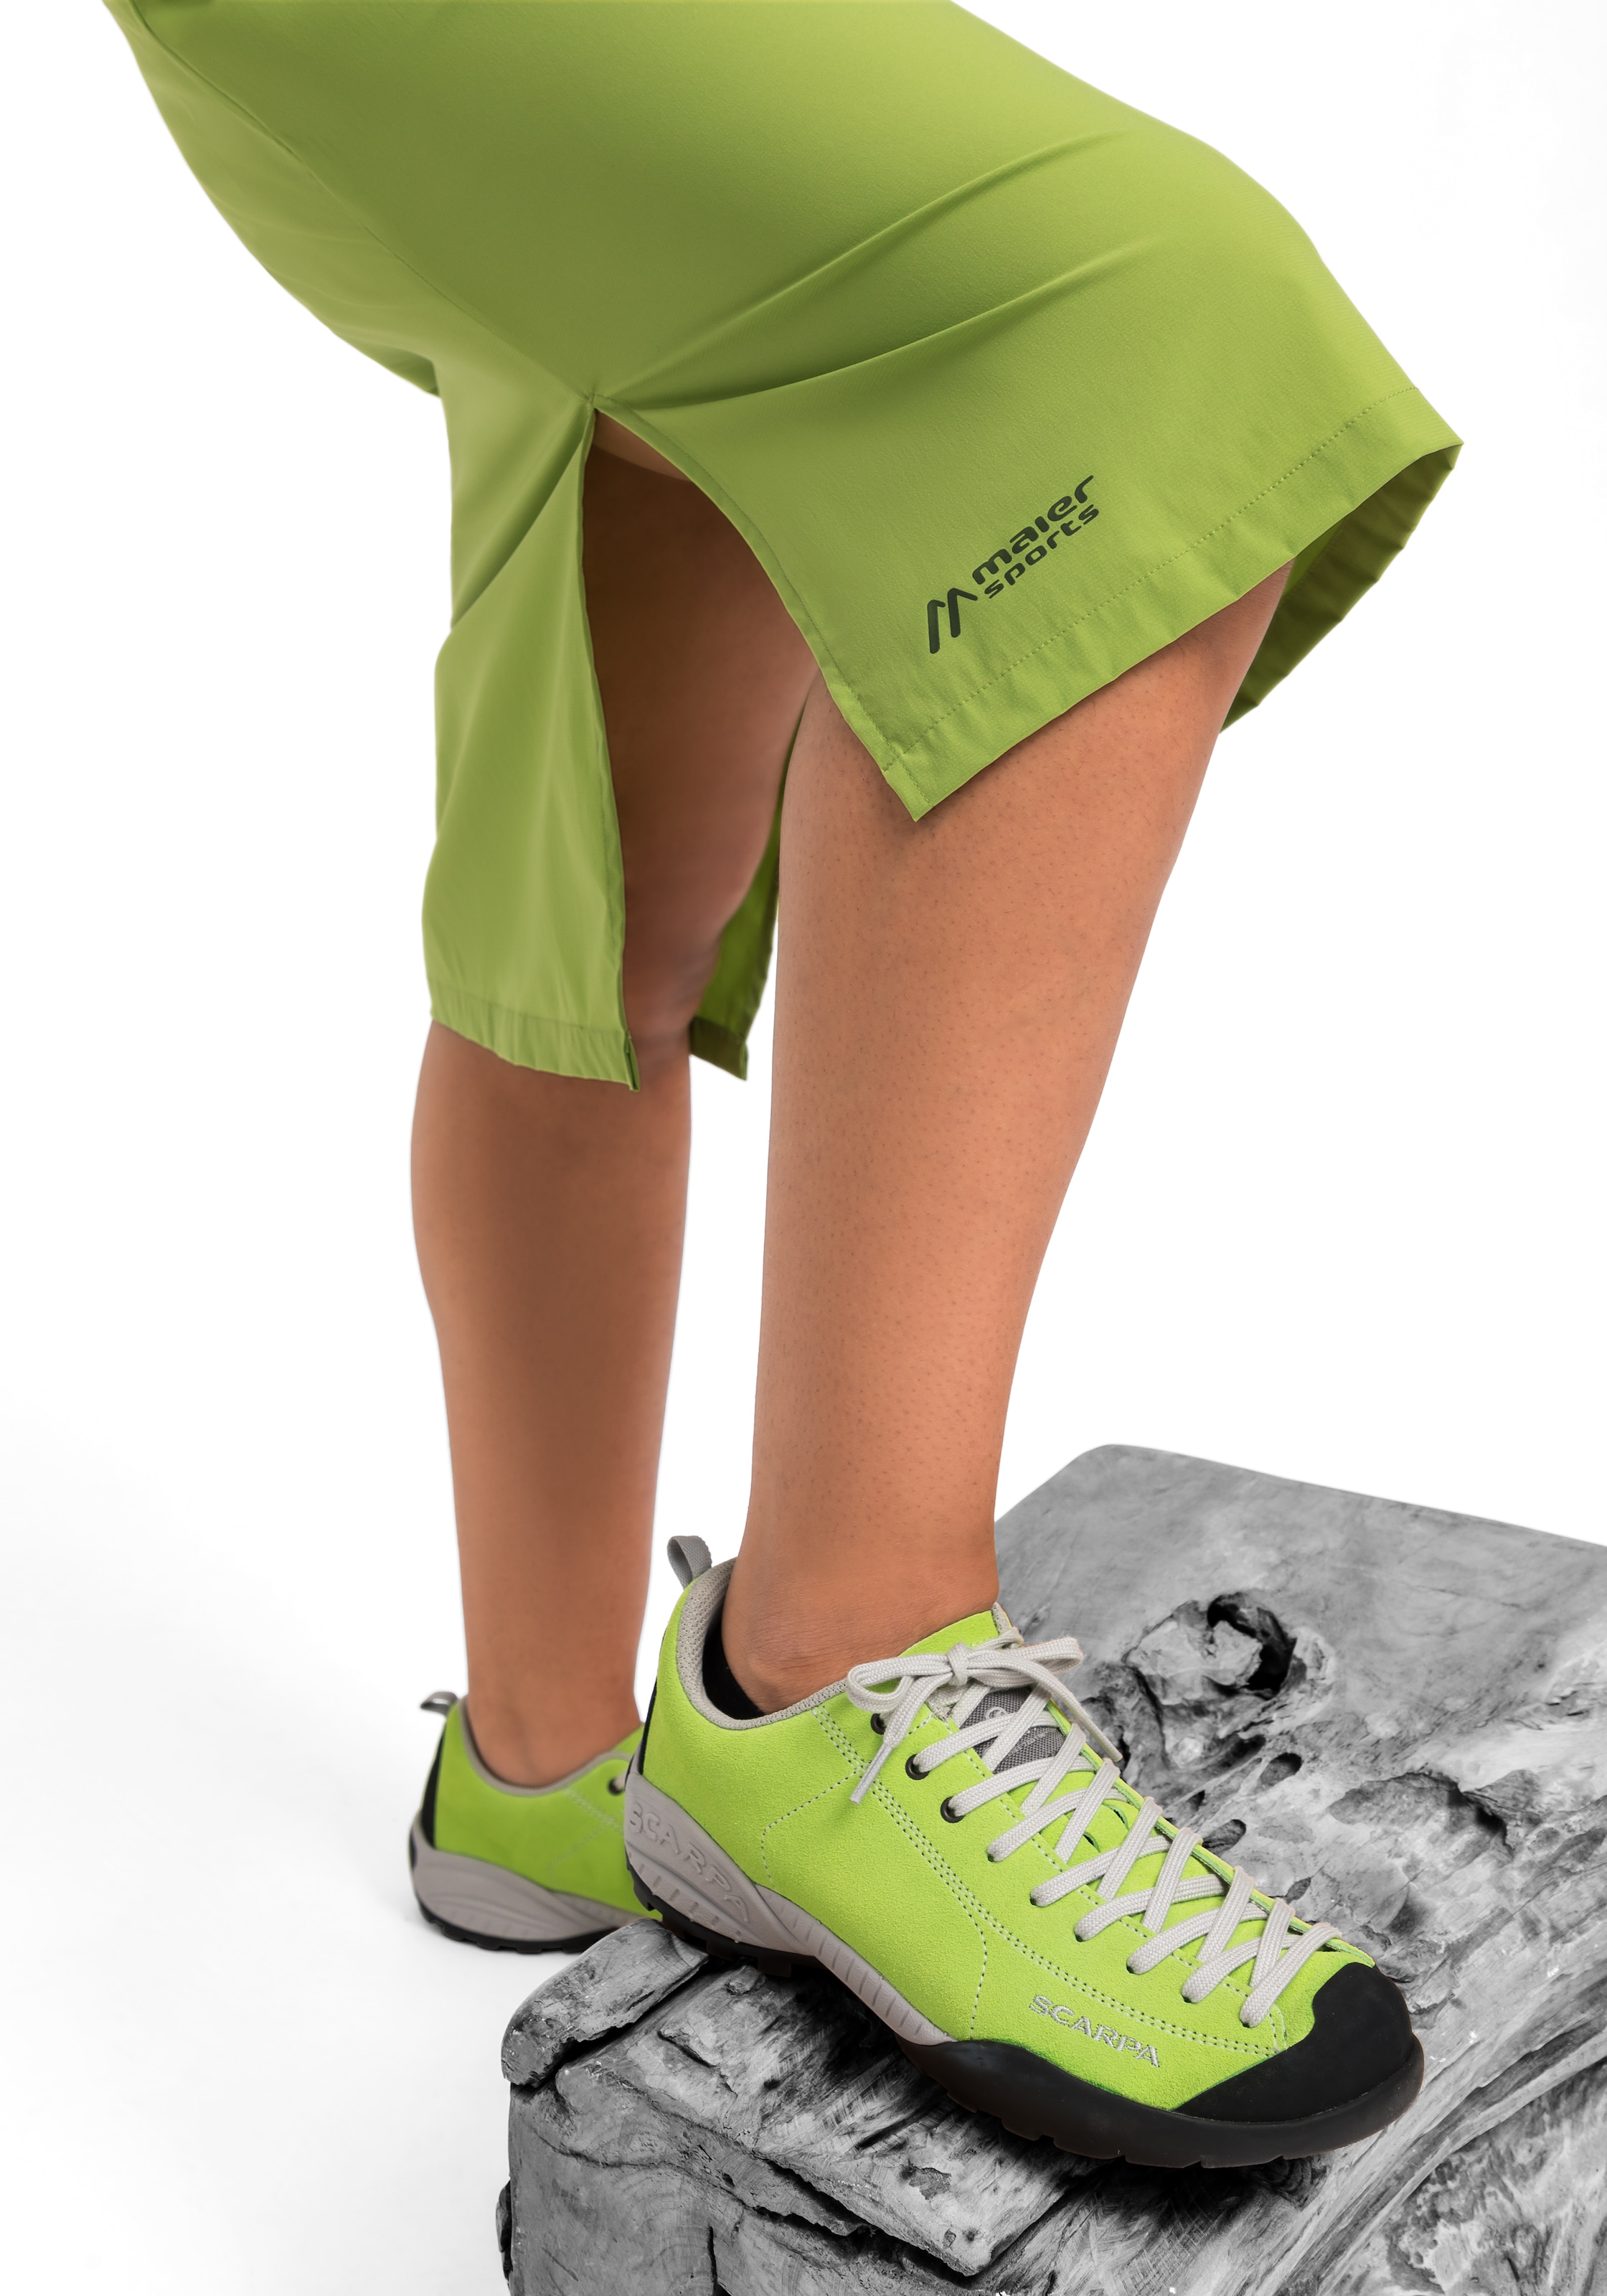 Maier Sports Sommerrock kaufen »Fortunit Skirt«